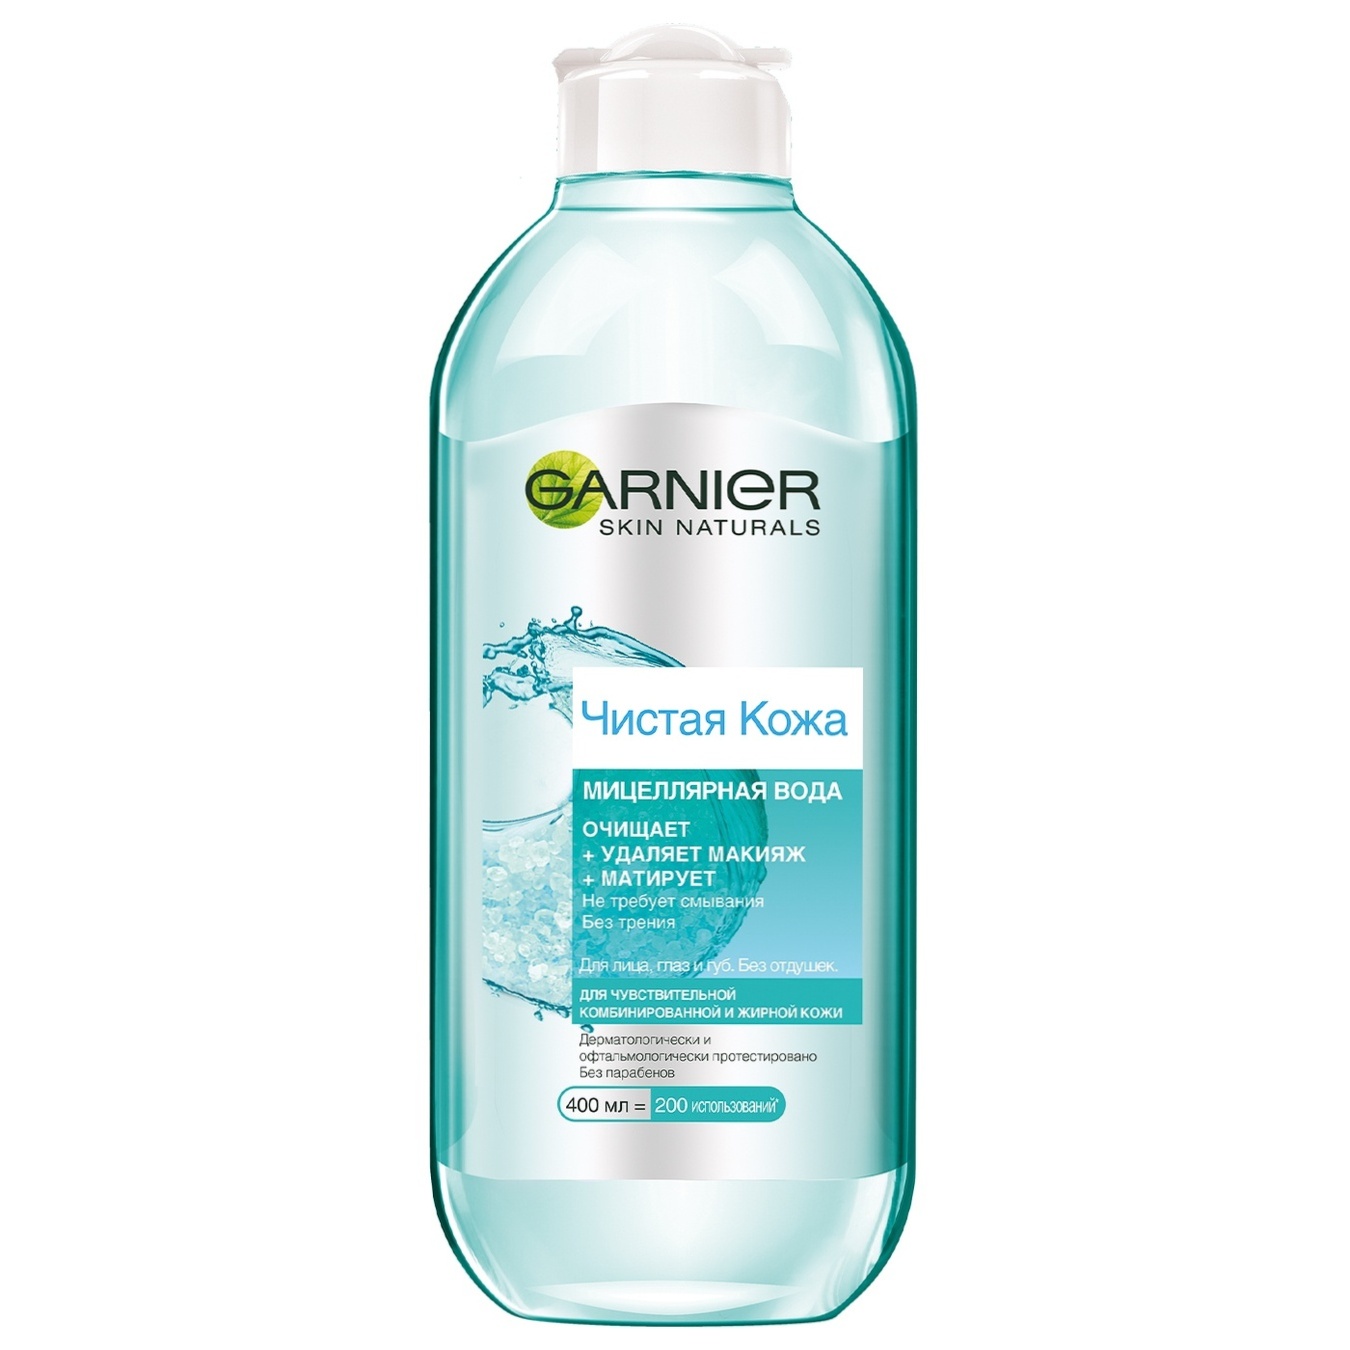 Garnier Skin Naturals micellar water for cleaning oily sensitive facial skin 400 ml